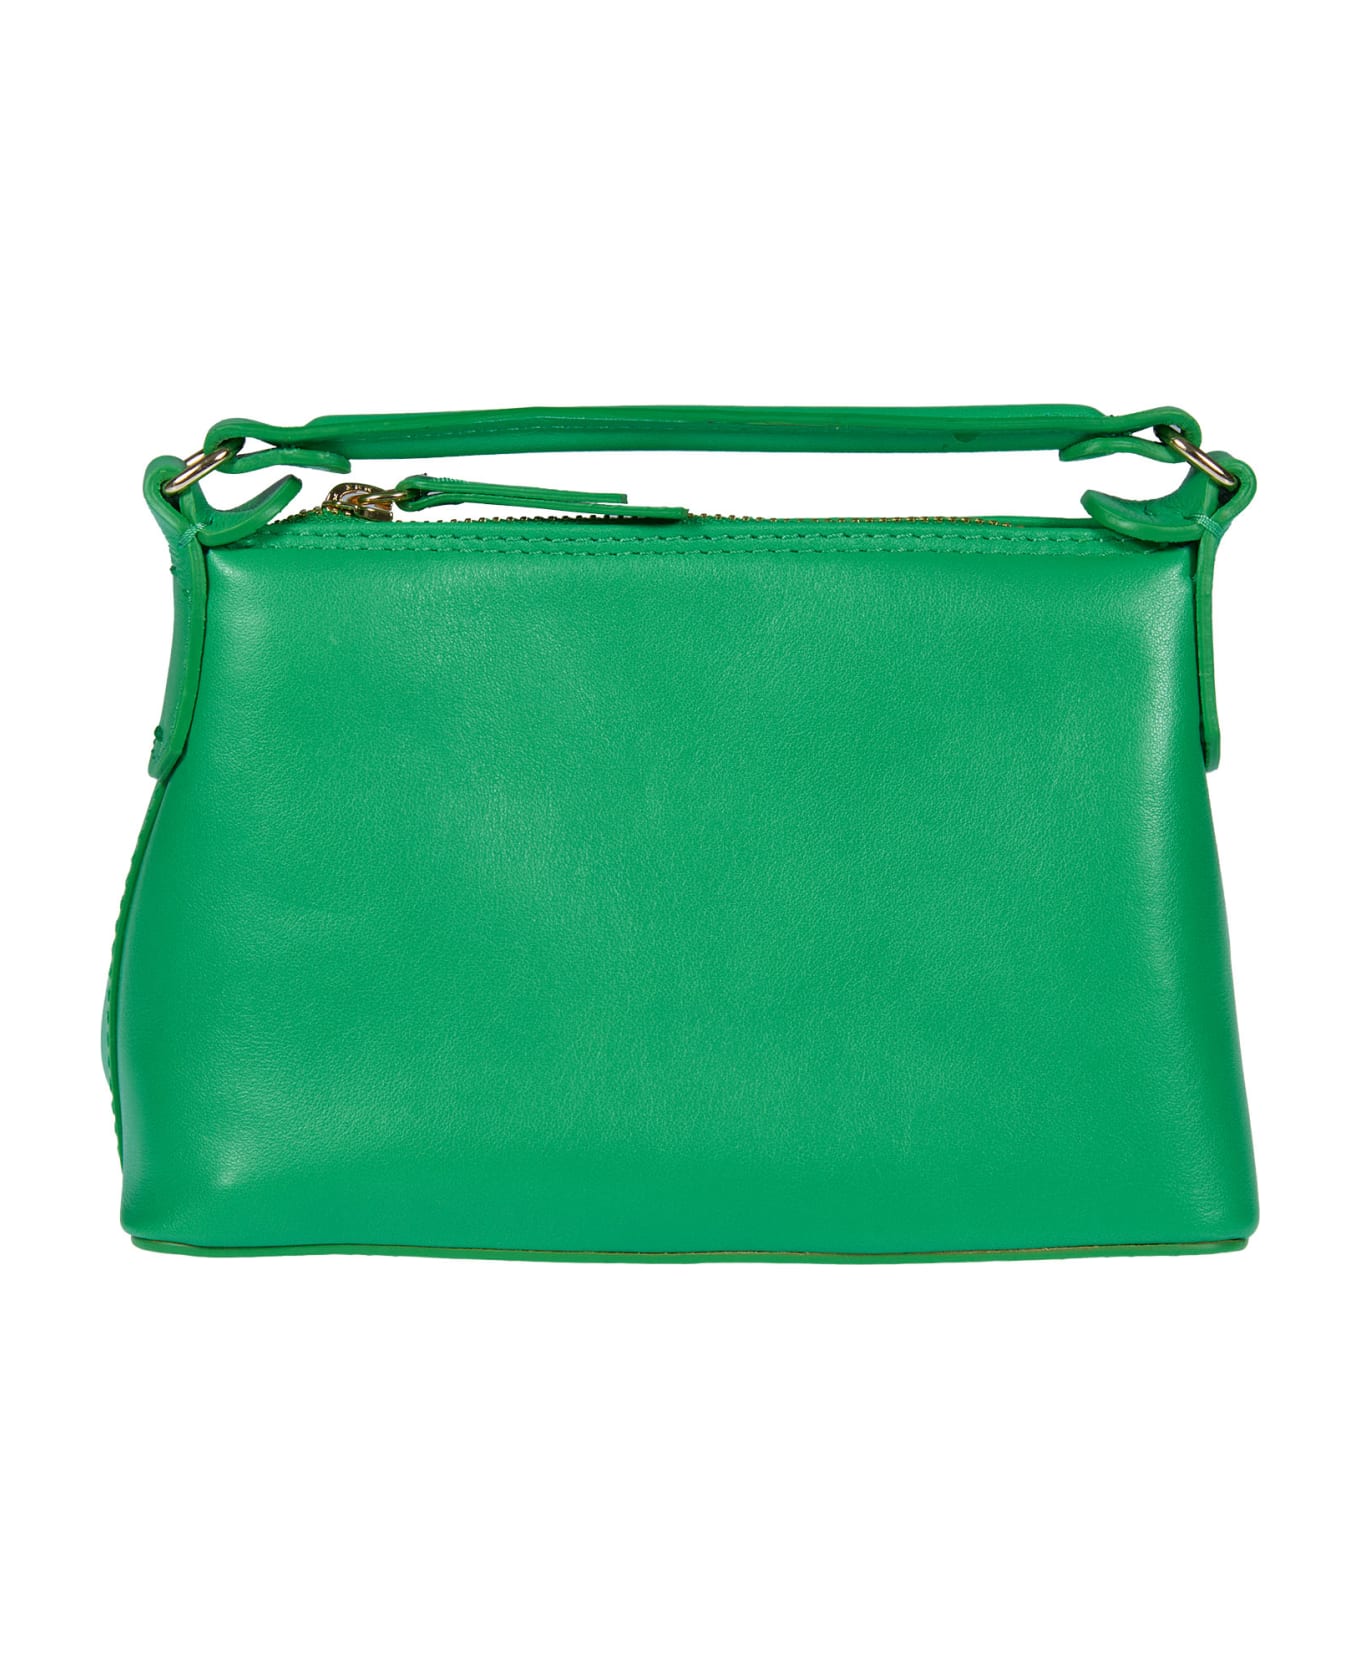 Liu-Jo Mini Hobo Green Bag - Green